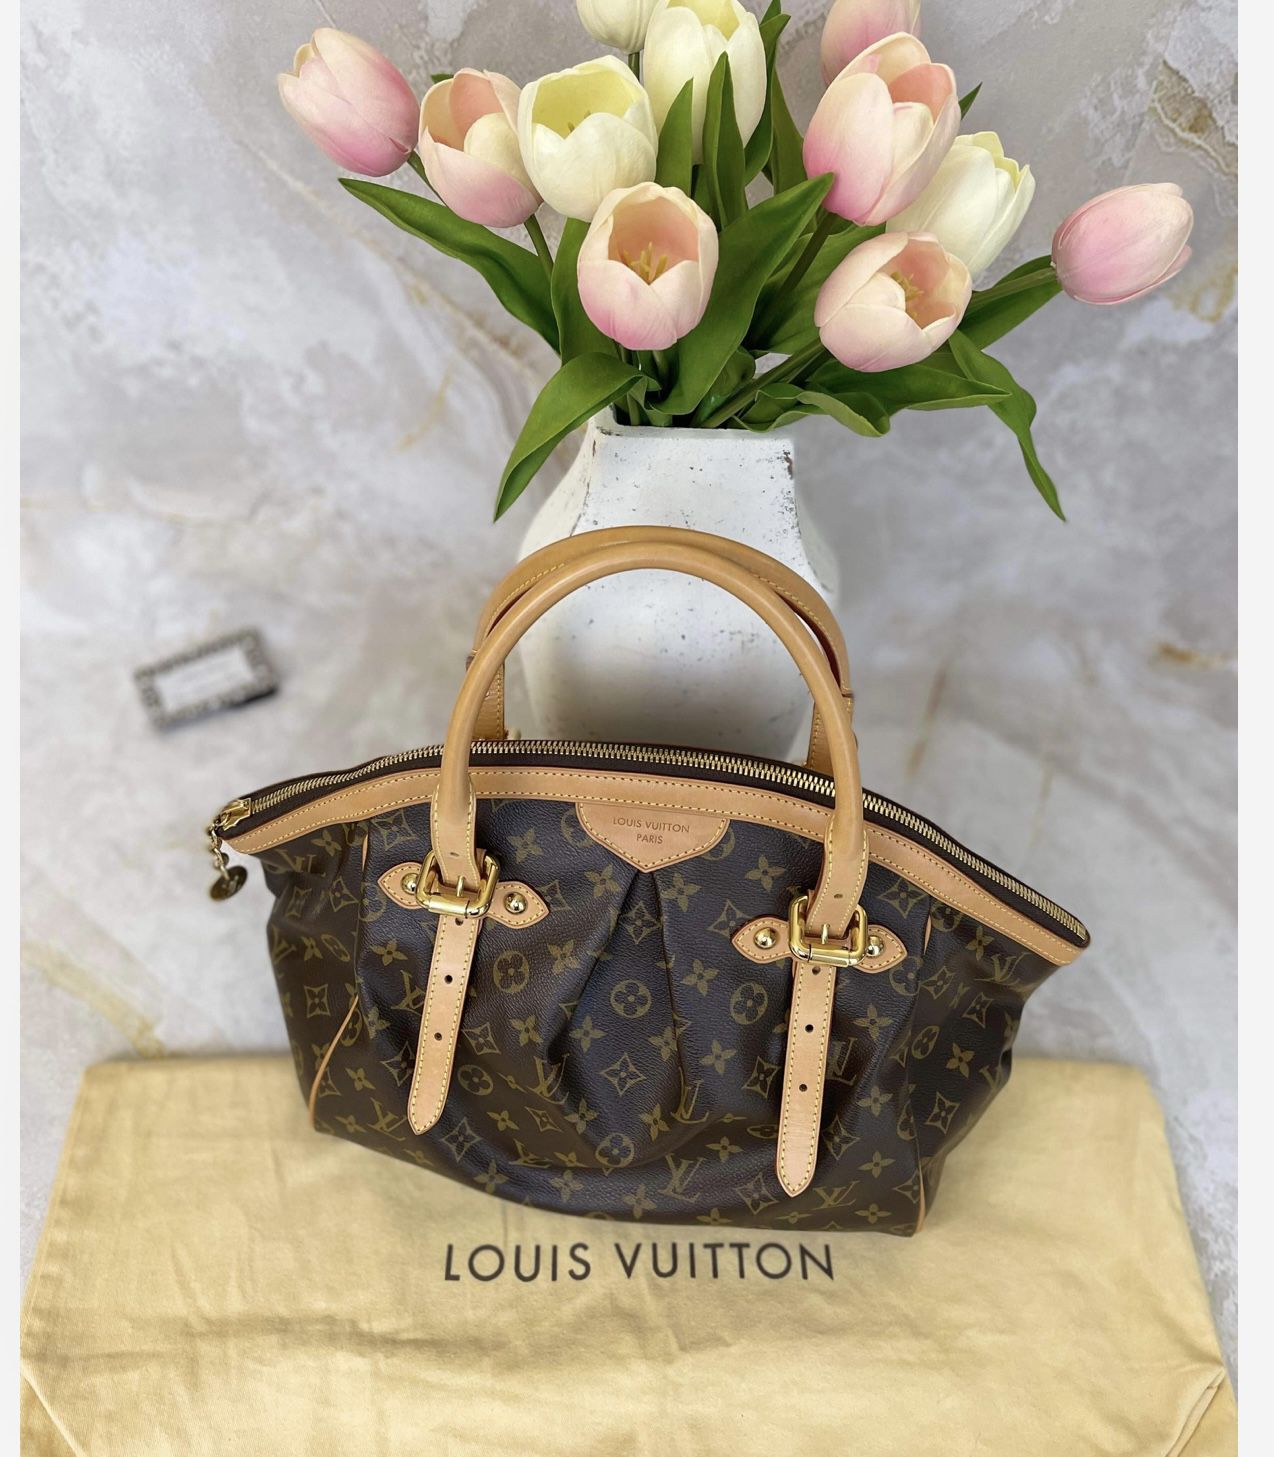 Louis Vuitton Tivoli Bag for Sale in Long Beach, CA - OfferUp